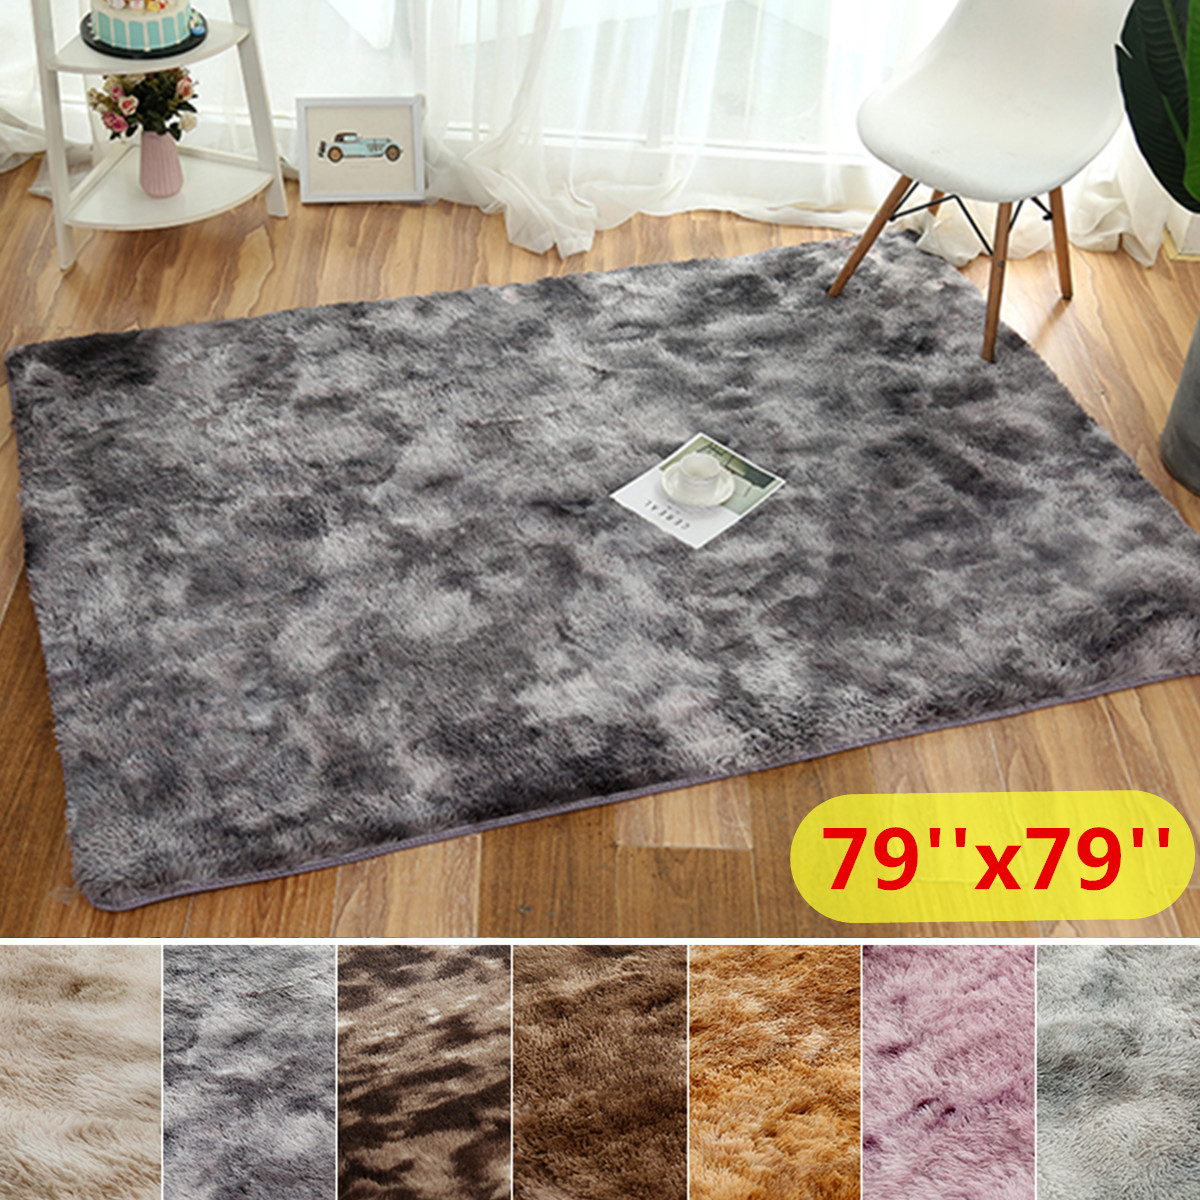 Fluffy-Rug-Shaggy-Floor-Mat-Soft-Faux-Fur-Home-Bedroom-Sheepskin-Hairy-Carpet-Blankets-1661016-1